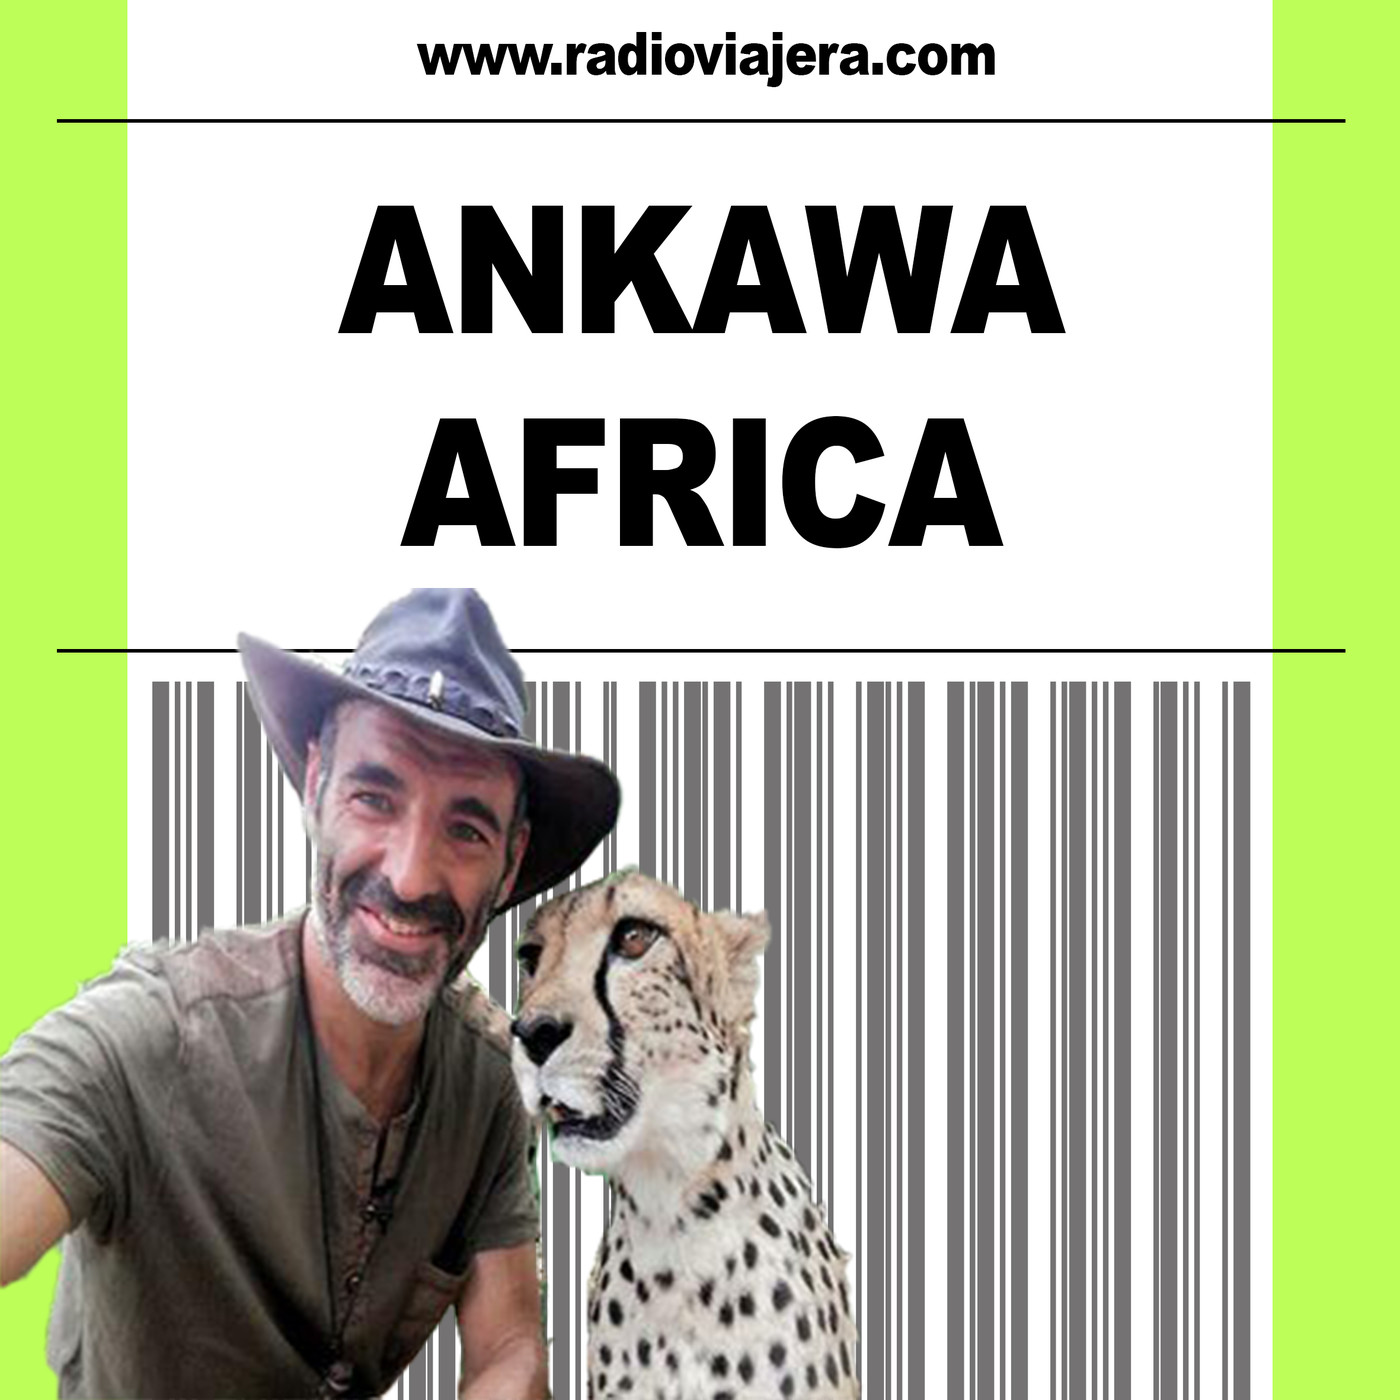 ANKAWA AFRICA